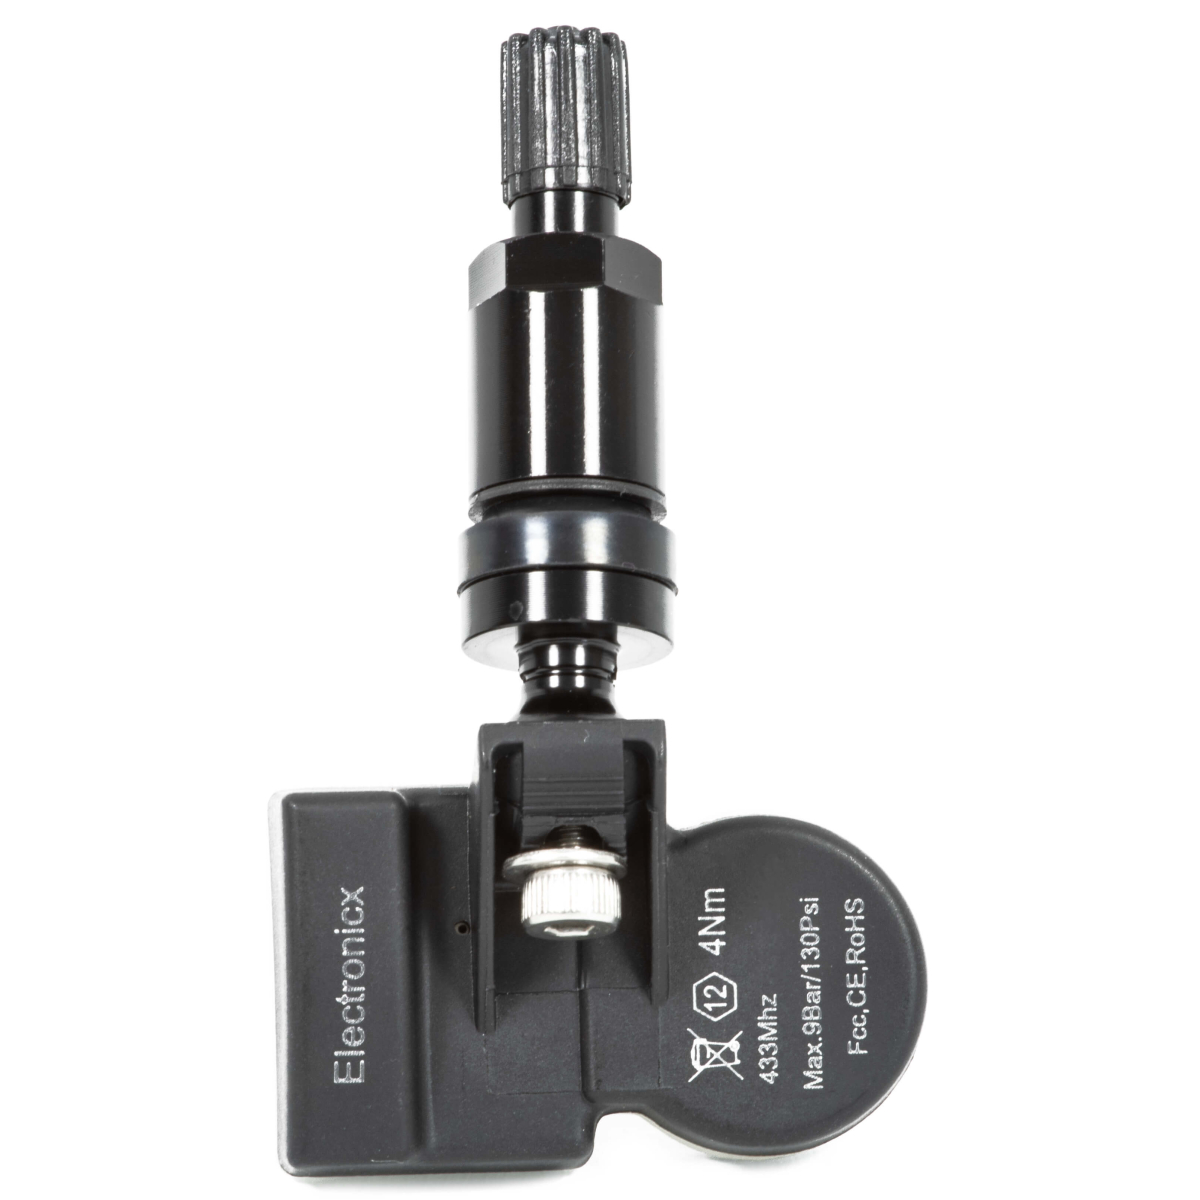 1x RDKS tyre pressure sensor metal valve in black freely programmable